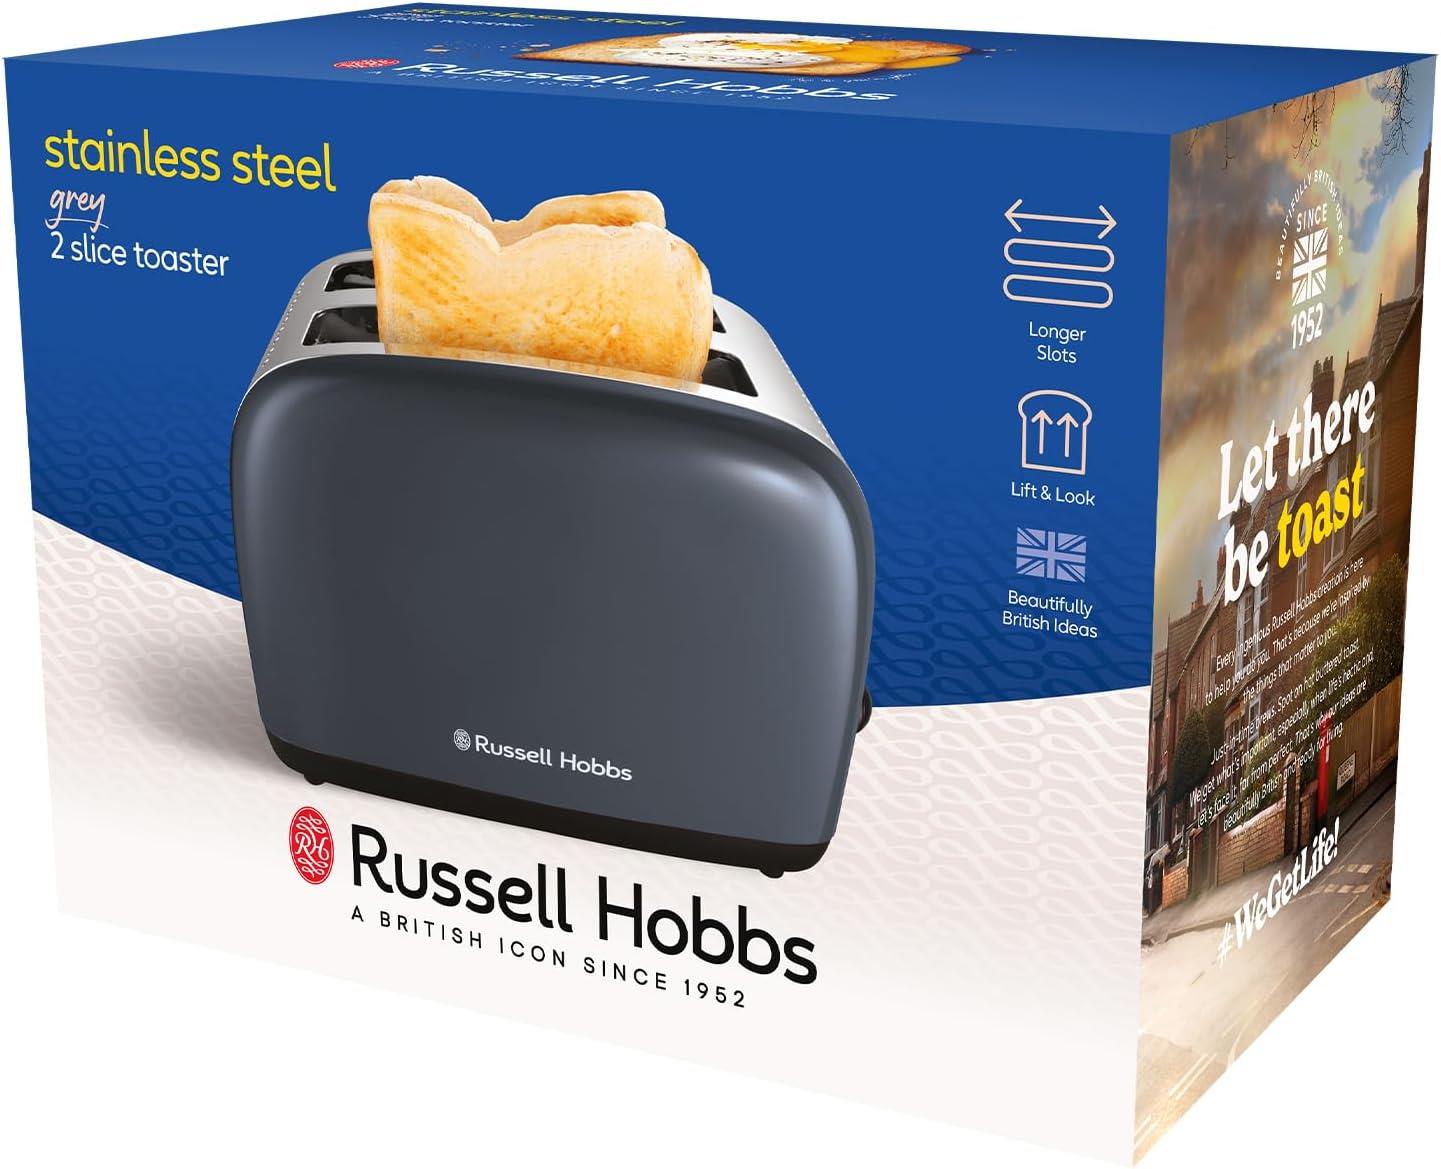 Russell Hobbs Stainless Steel Grey 2 Slice Toaster